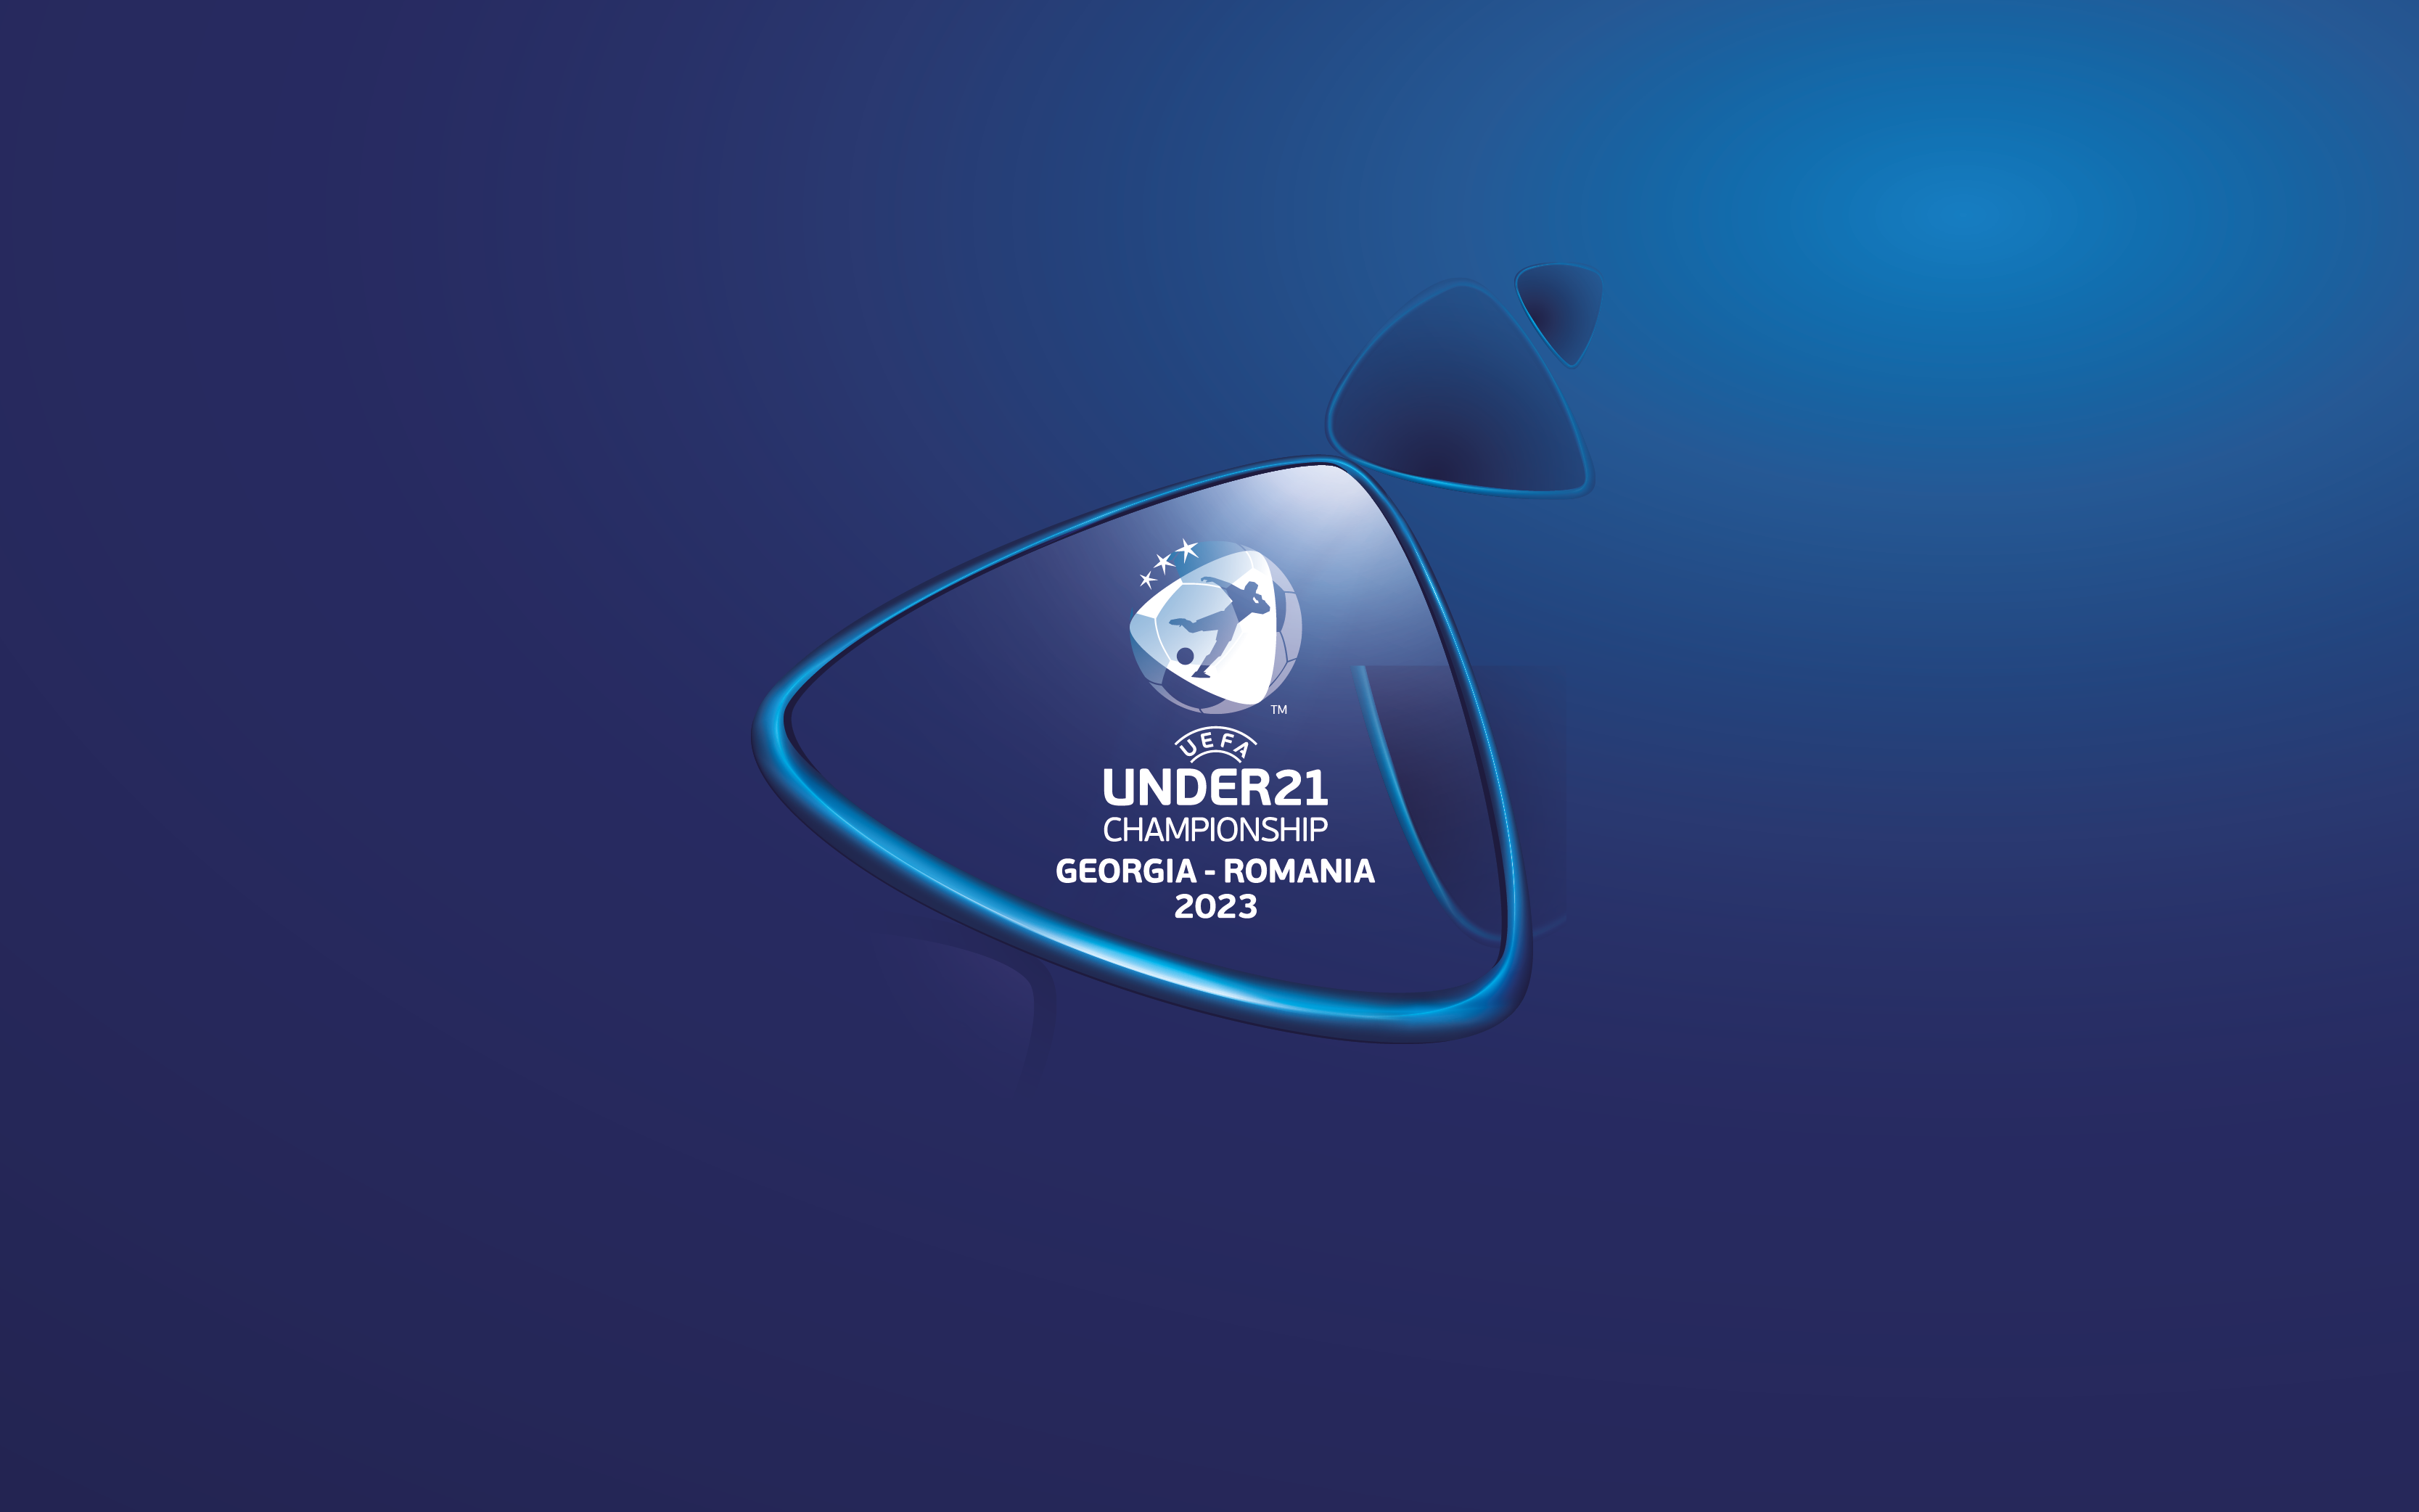 UEFA Under21 Championship Georgia - Romania 2023